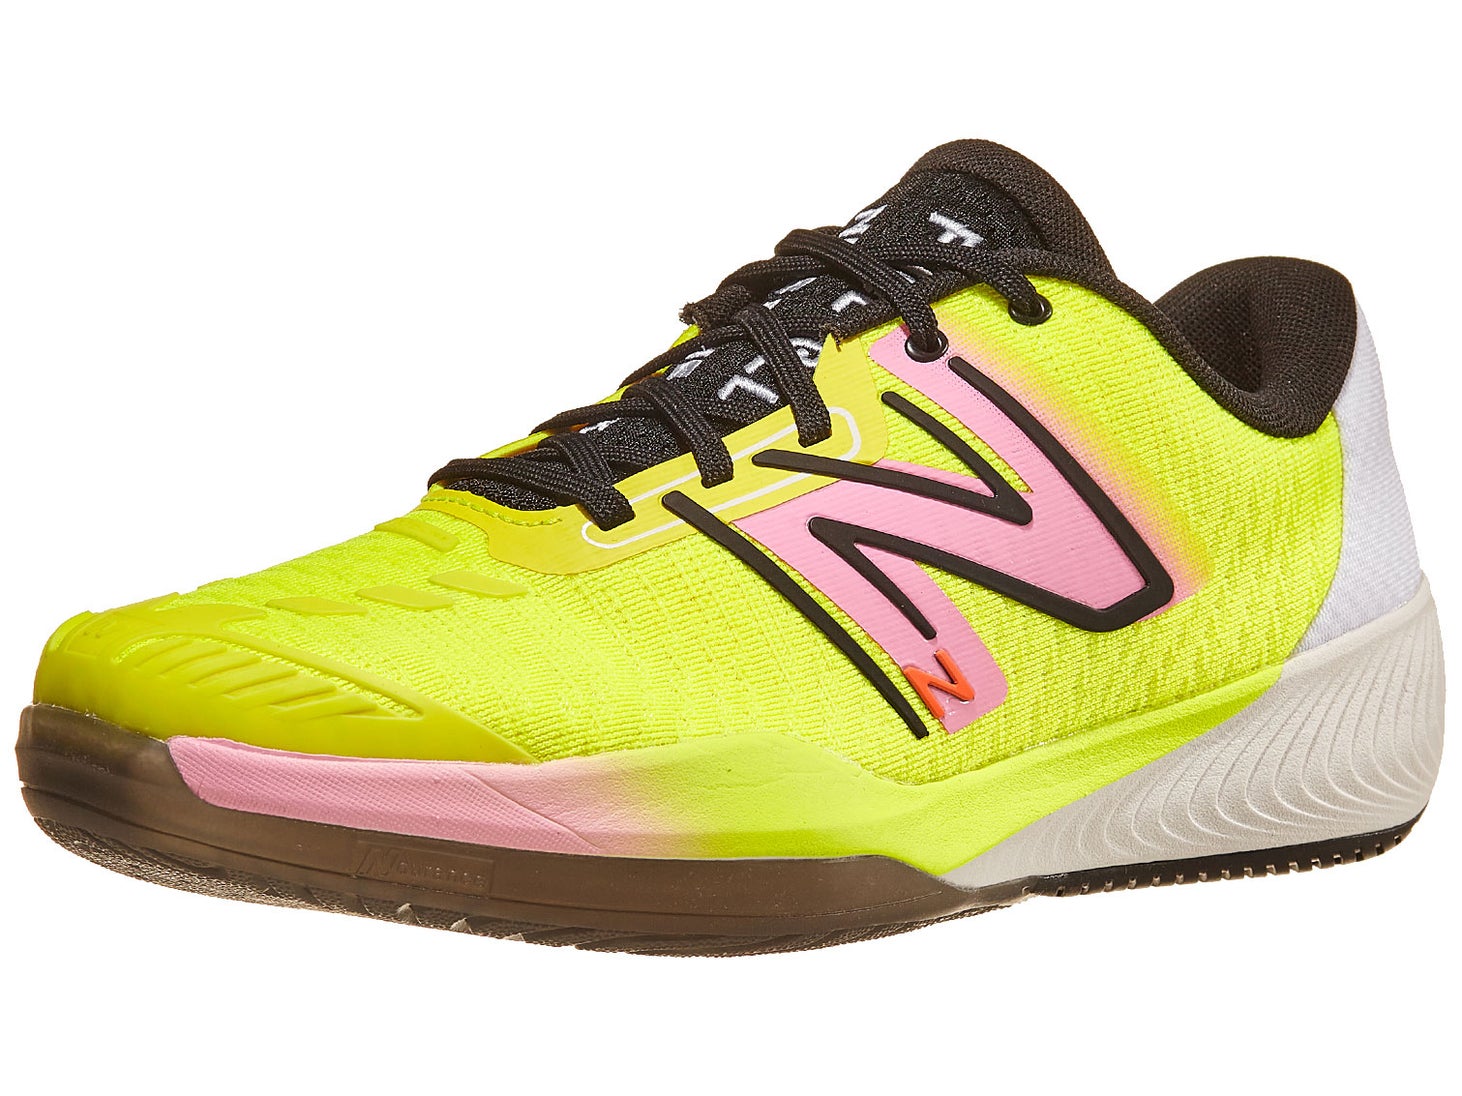 New Balance 996v5 D Pineapple/Rose Men's Shoes | Tennis Warehouse